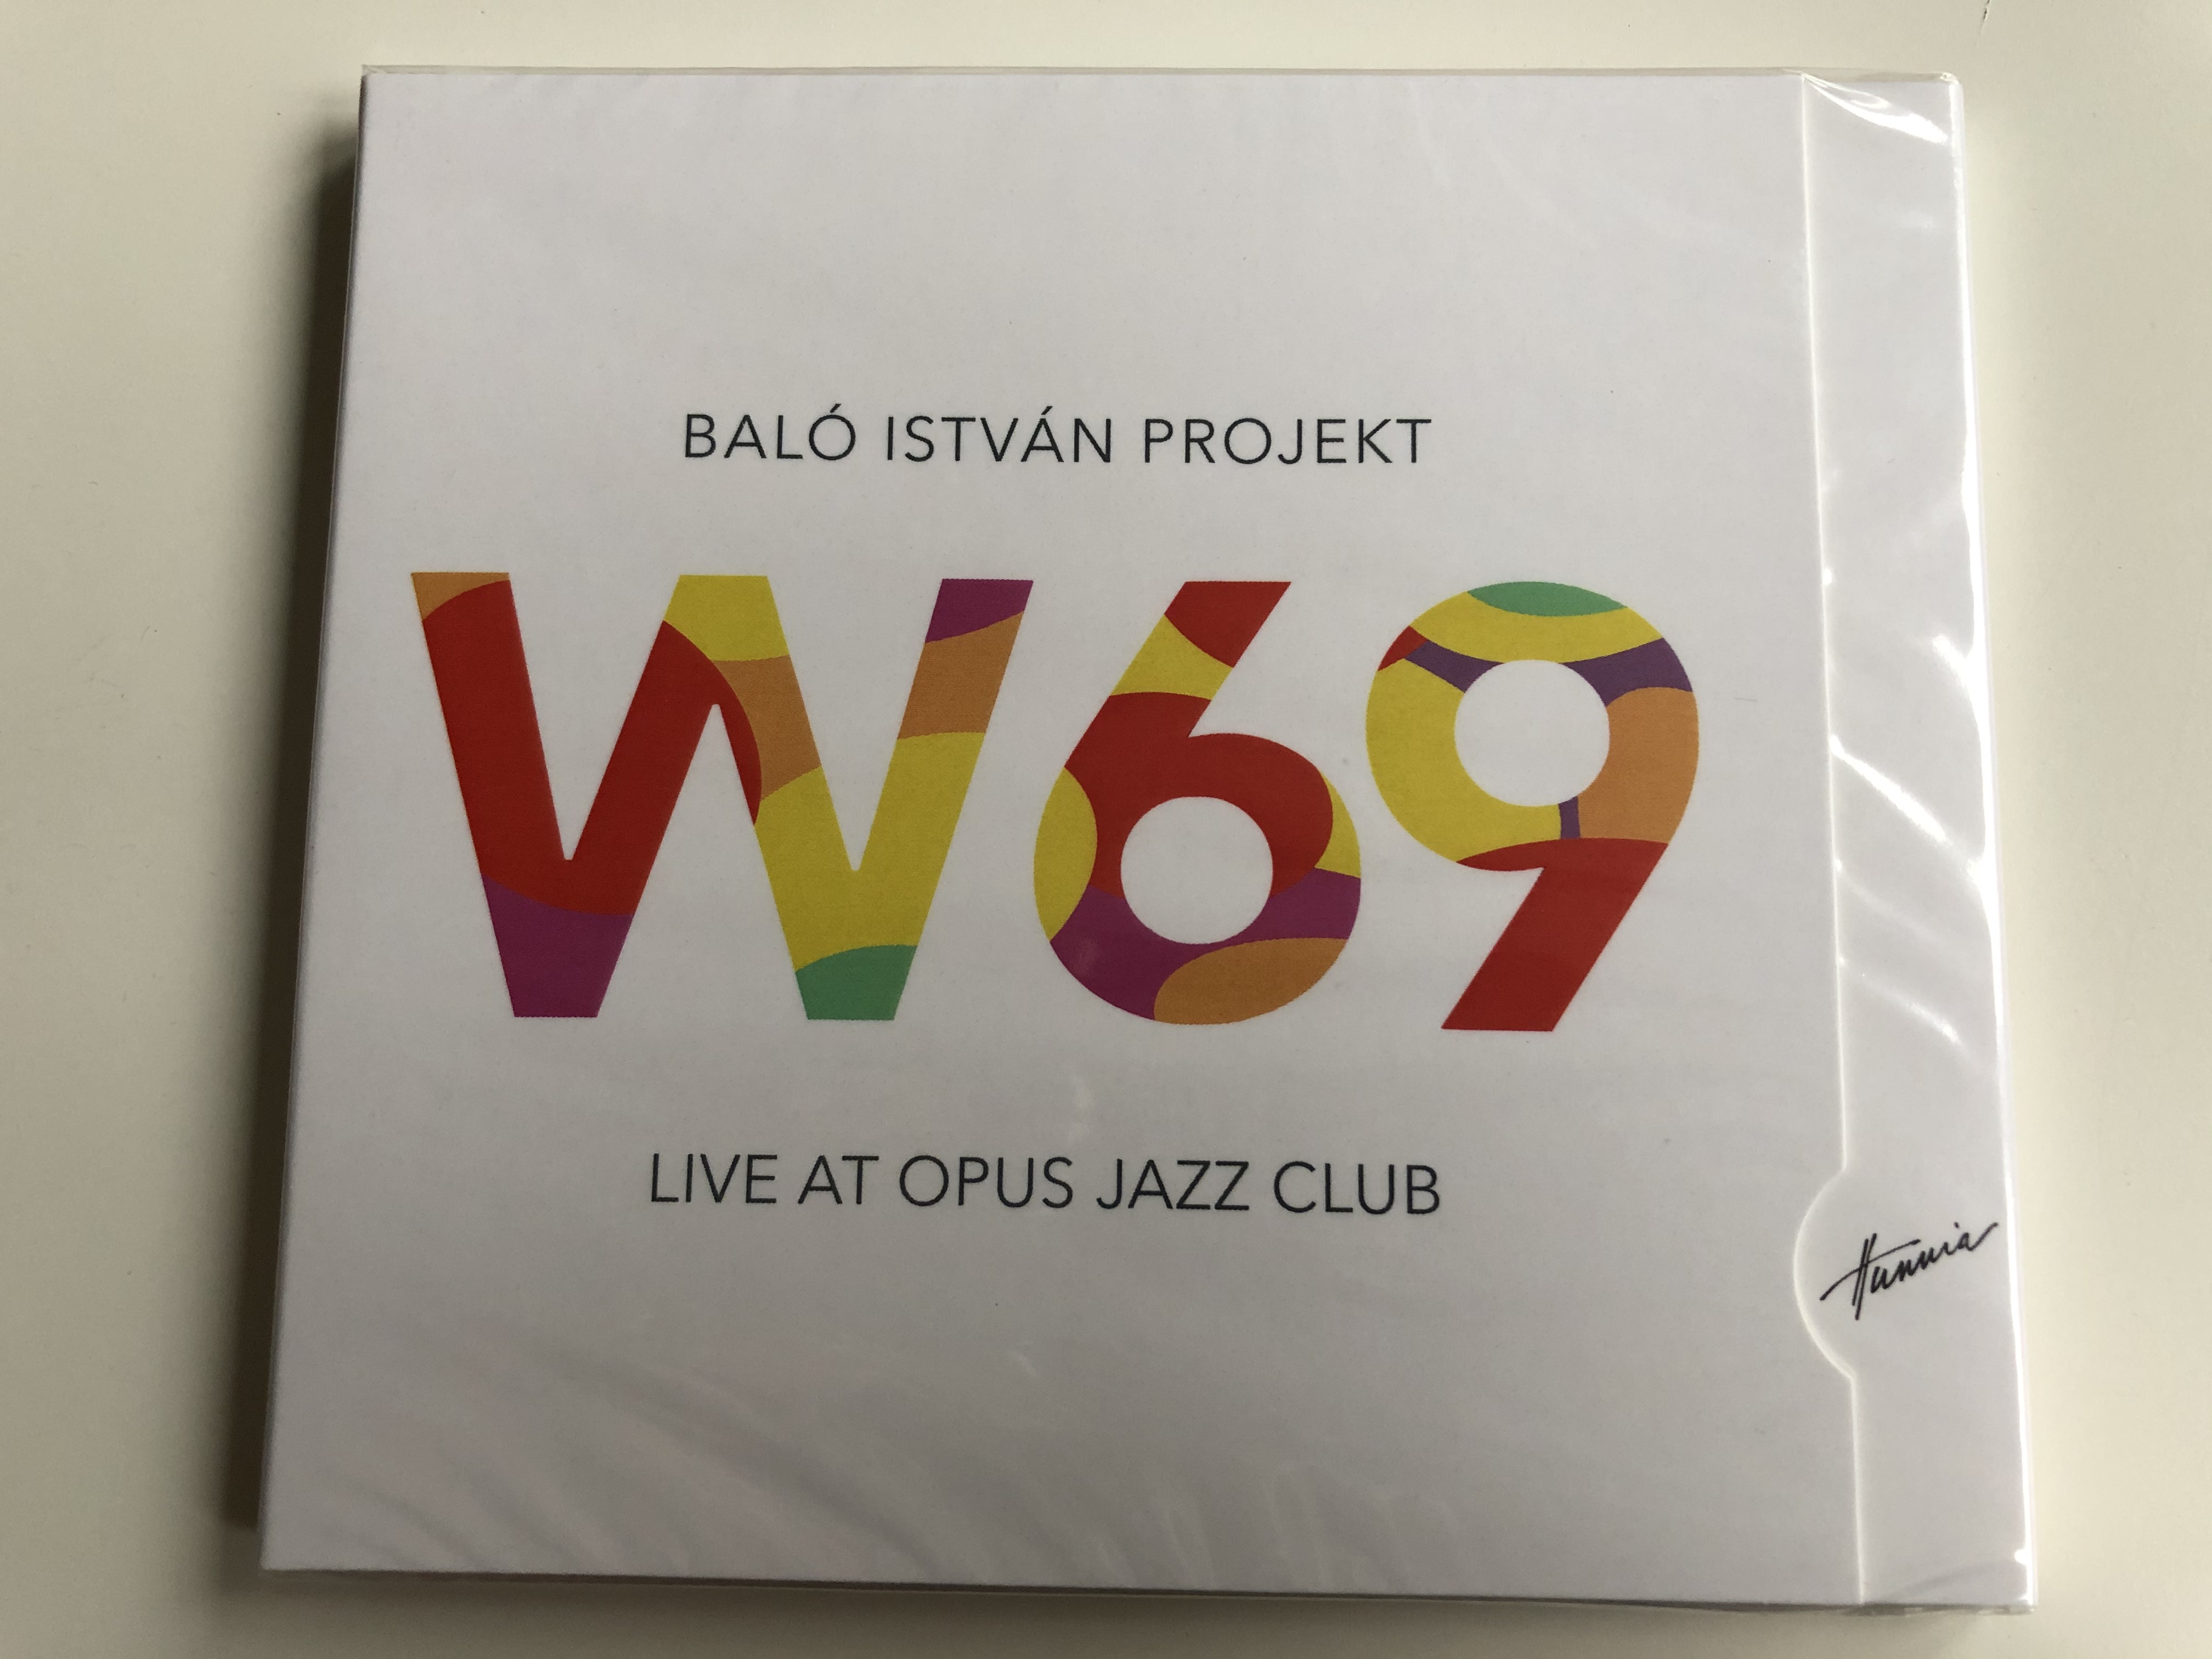 balo-istvan-projekt-w69-live-at-opus-jazz-club-hunnia-records-film-production-audio-cd-2019-hrcd1907-1-.jpg